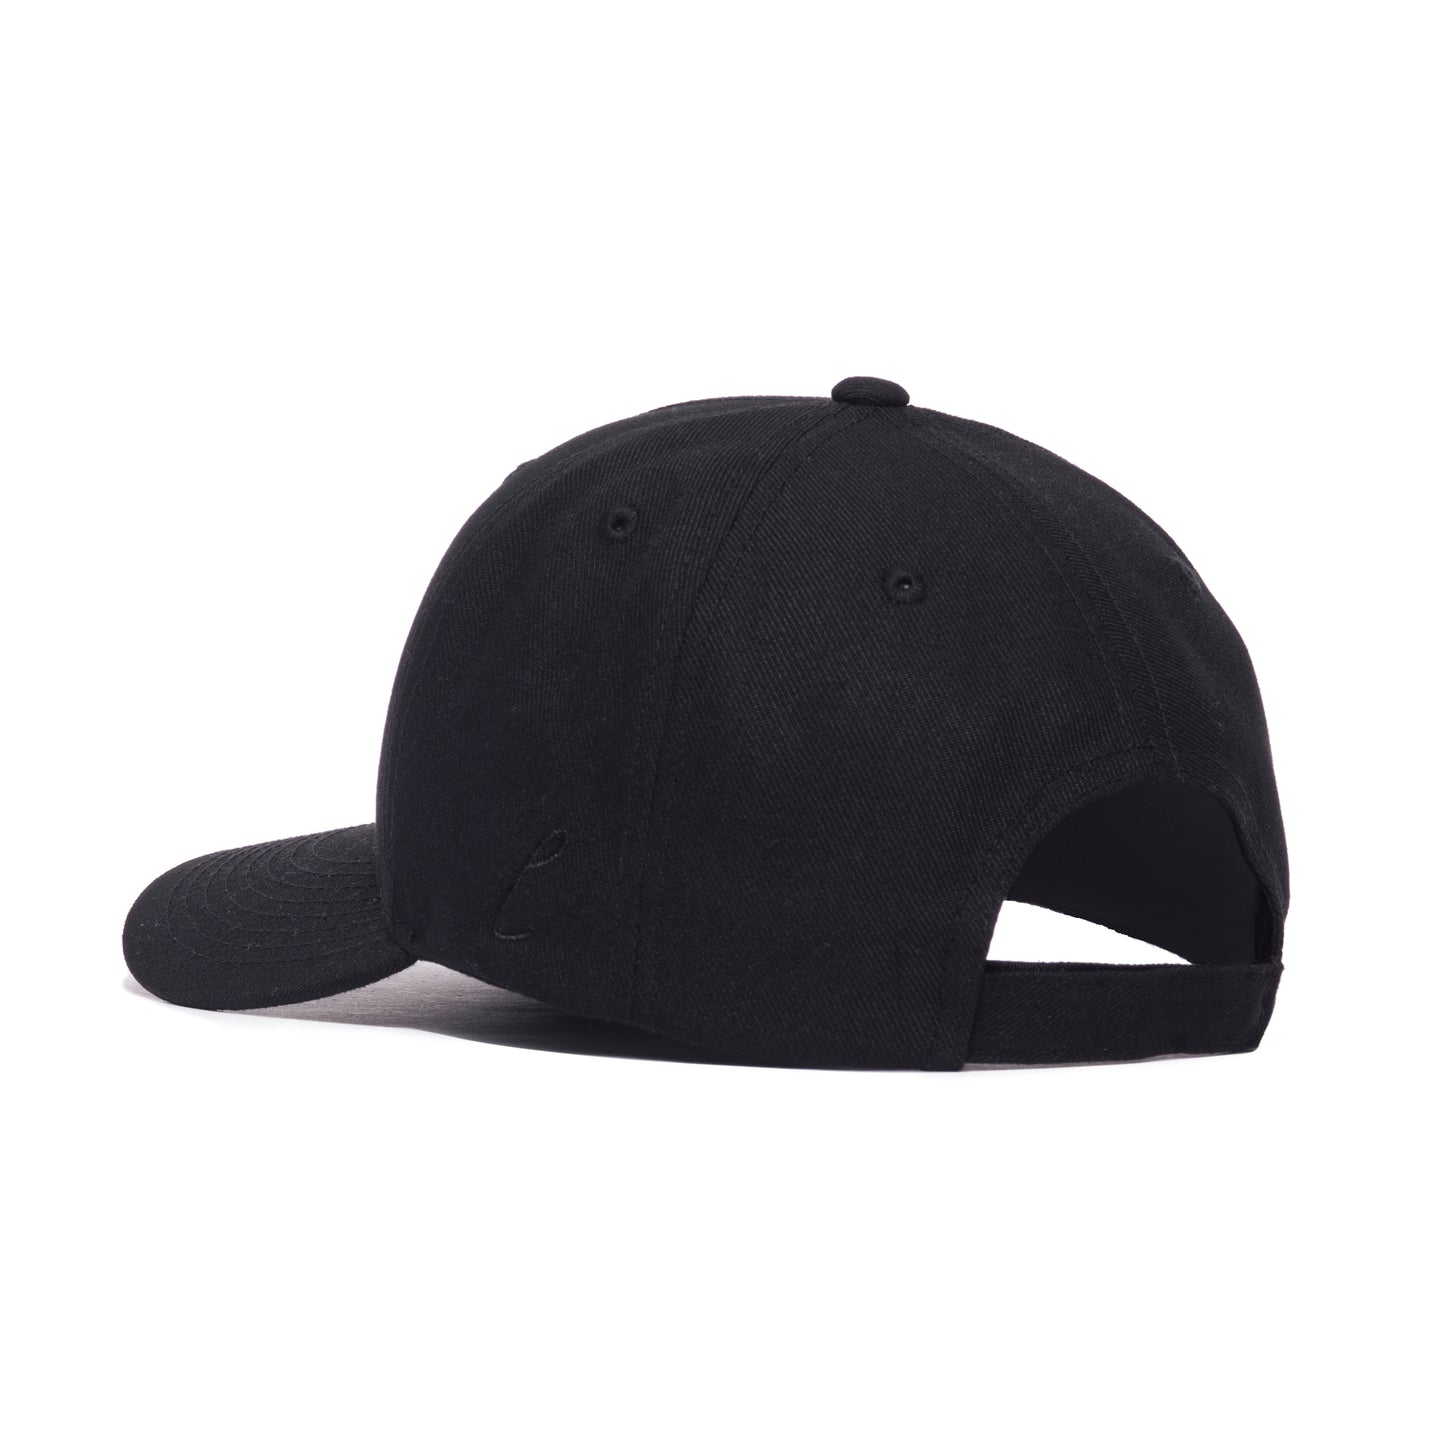 Hat - Onyx - Acrylic Polyester - L